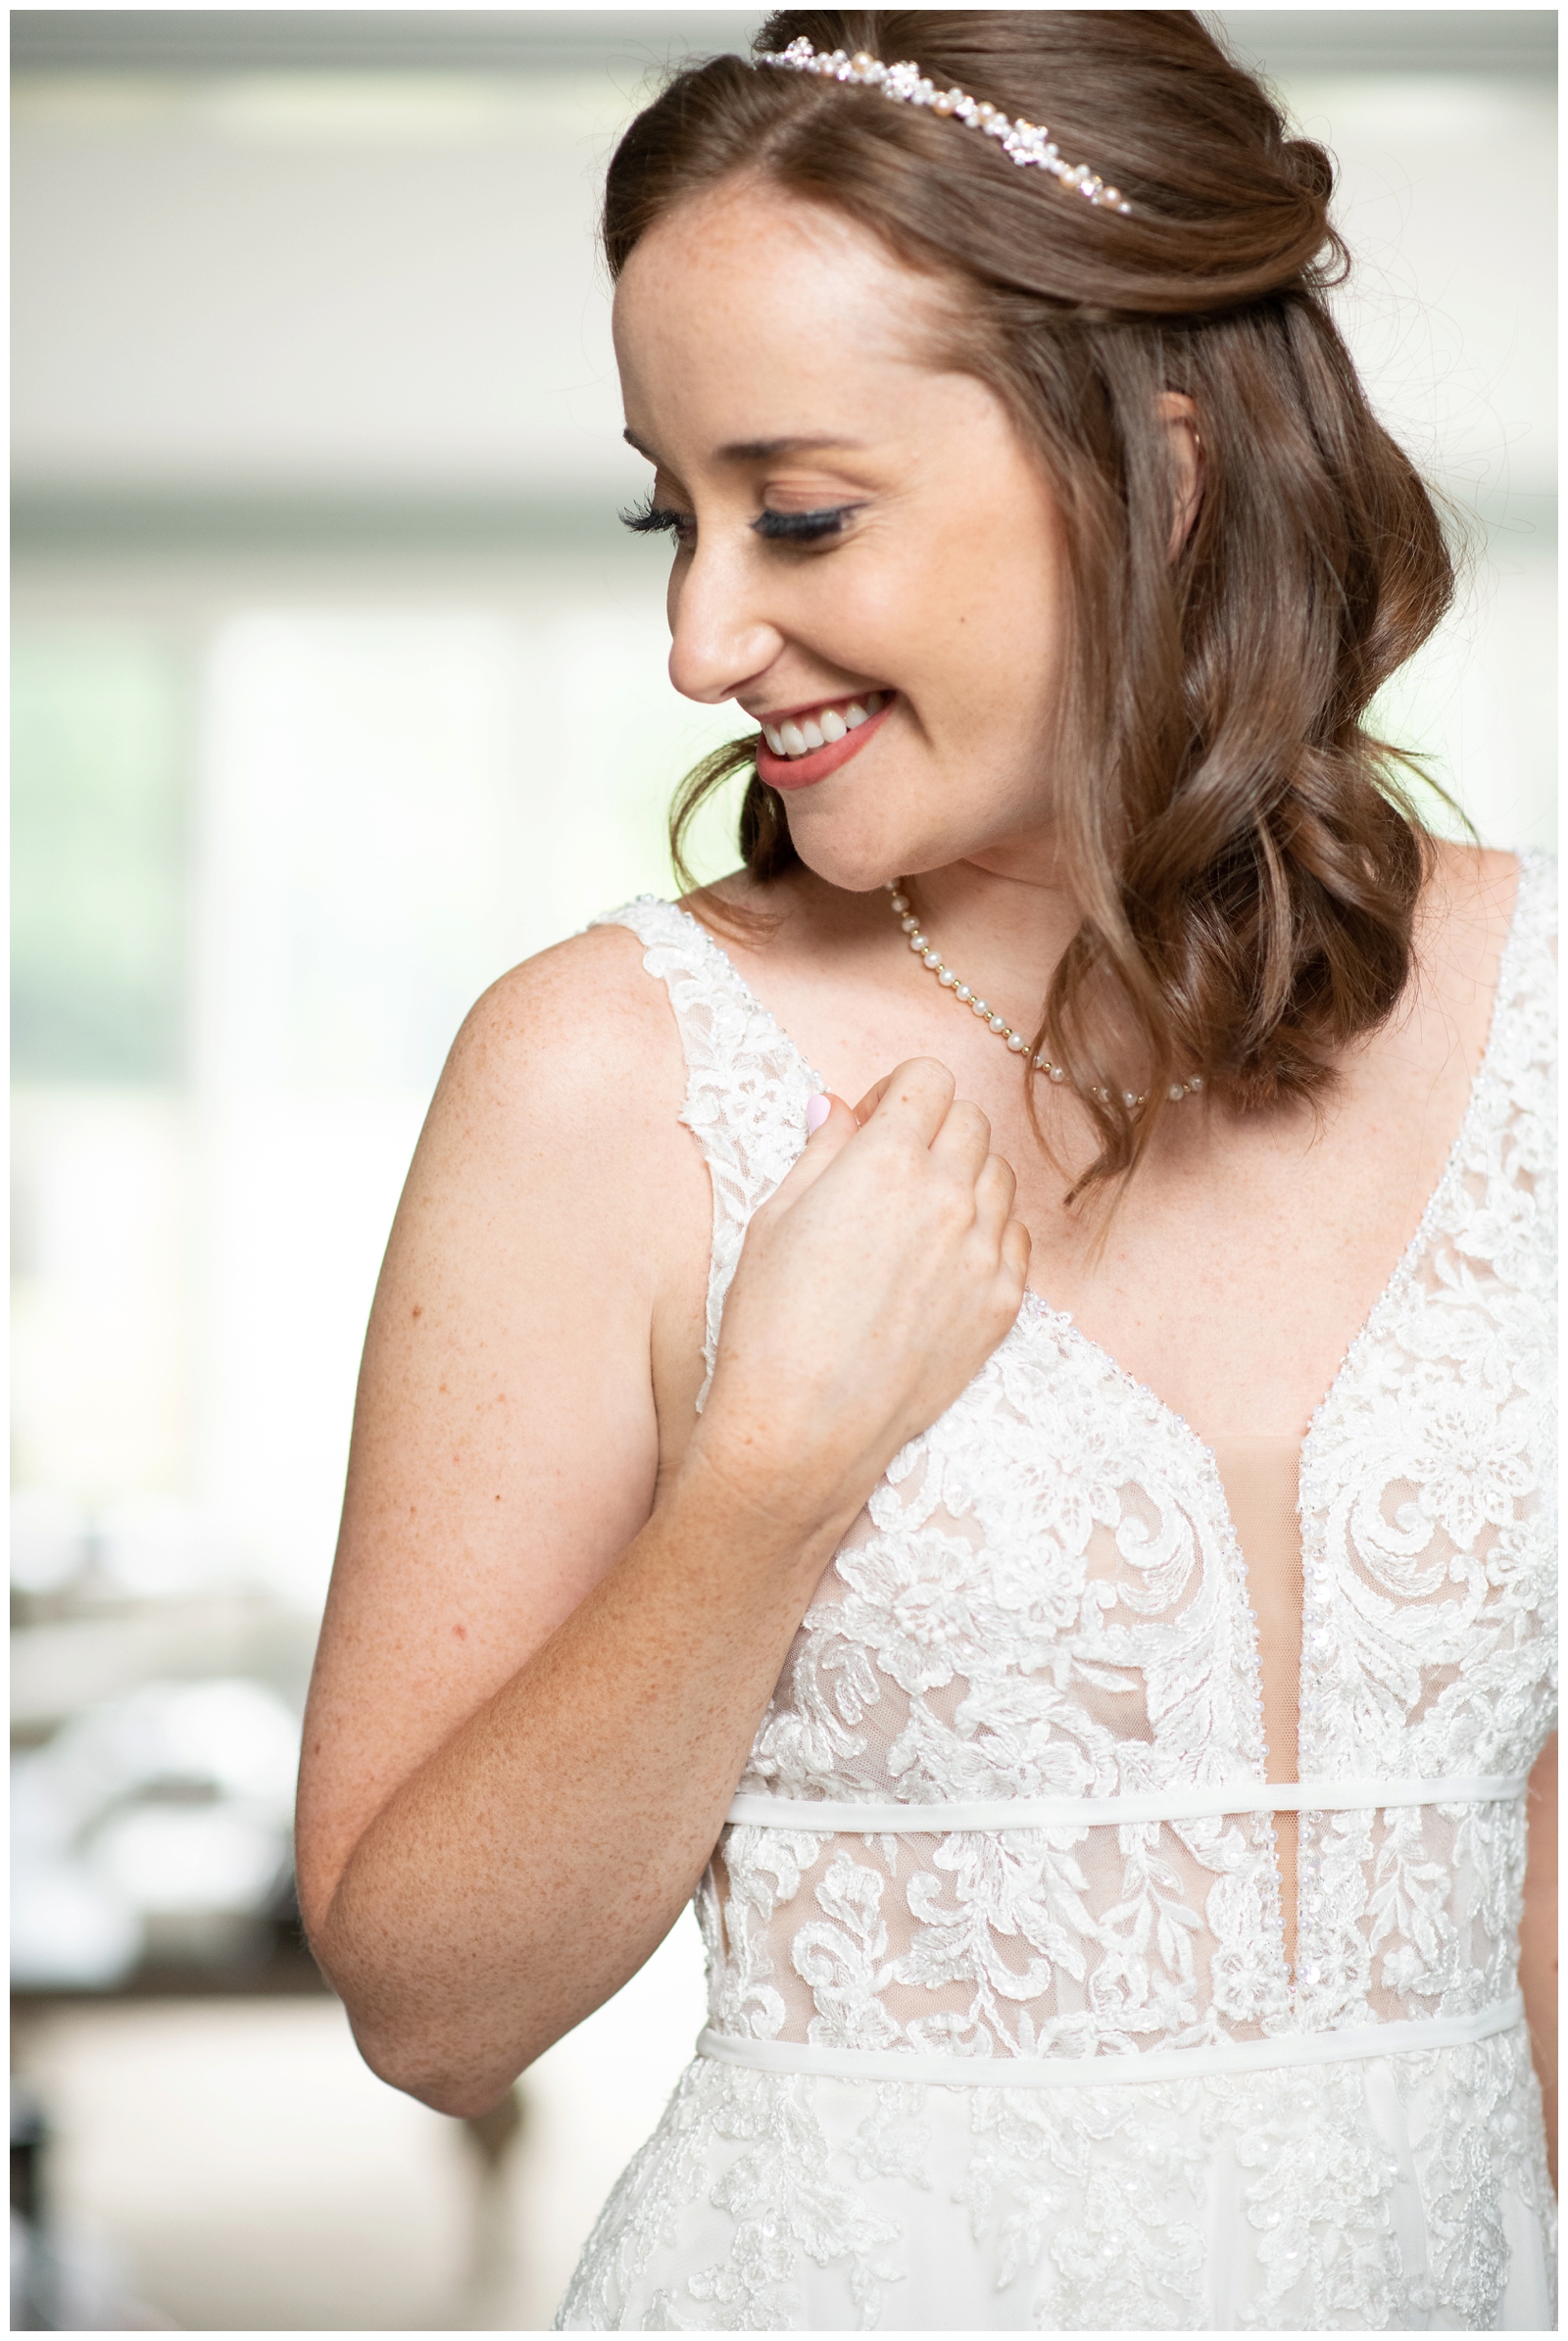 bride holds edge of wedding dress and looks over shoulder smiling